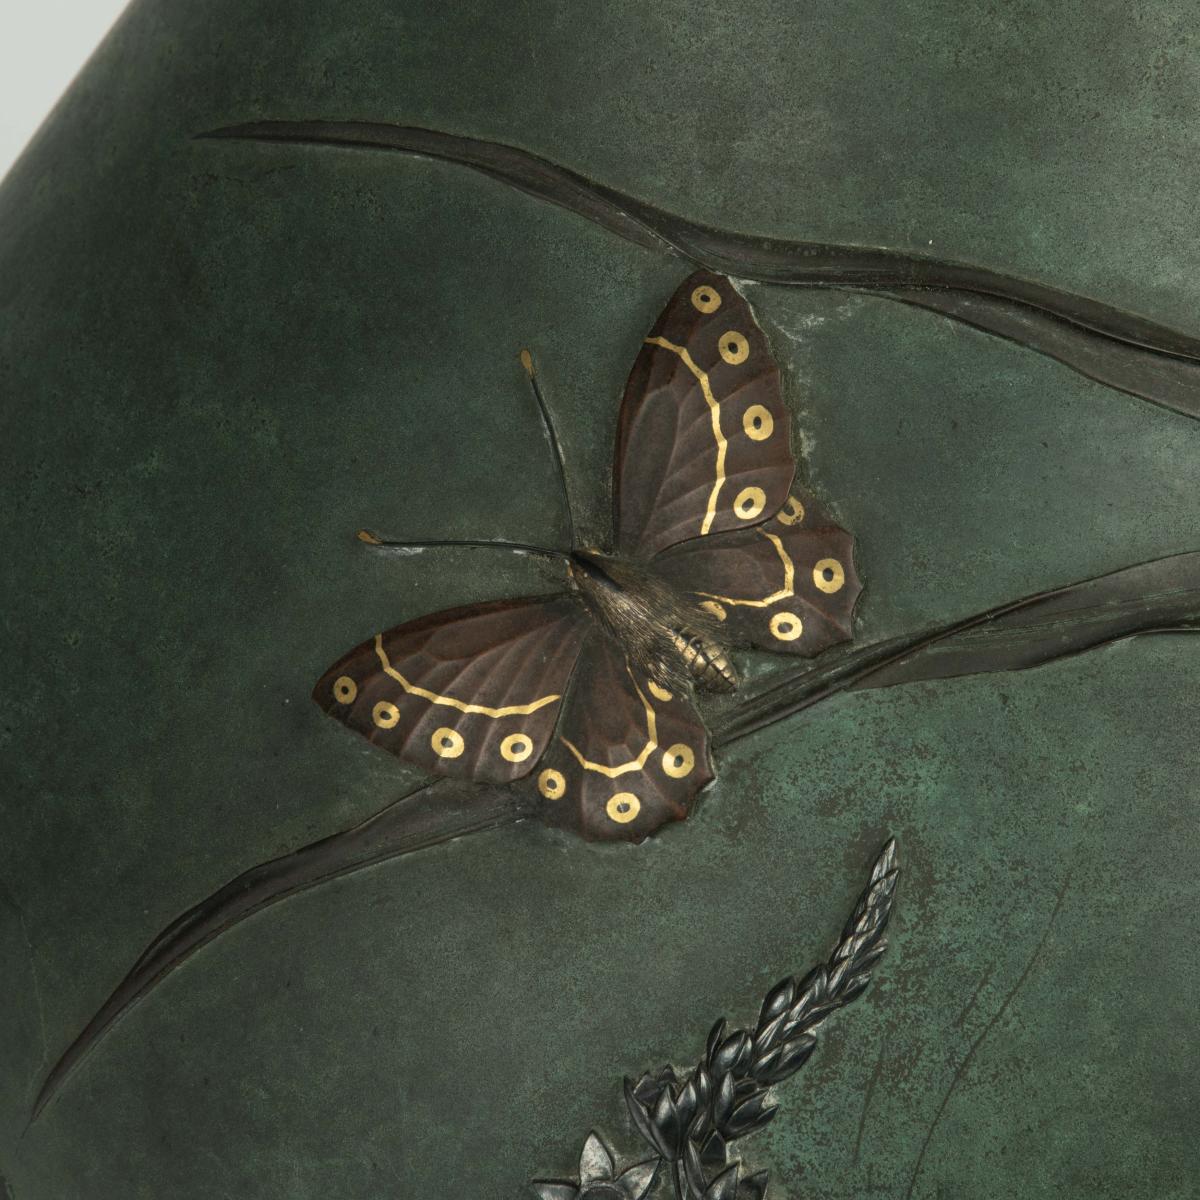 Meiji period patinated bronze vase by Kiryu Kosho Kaisha